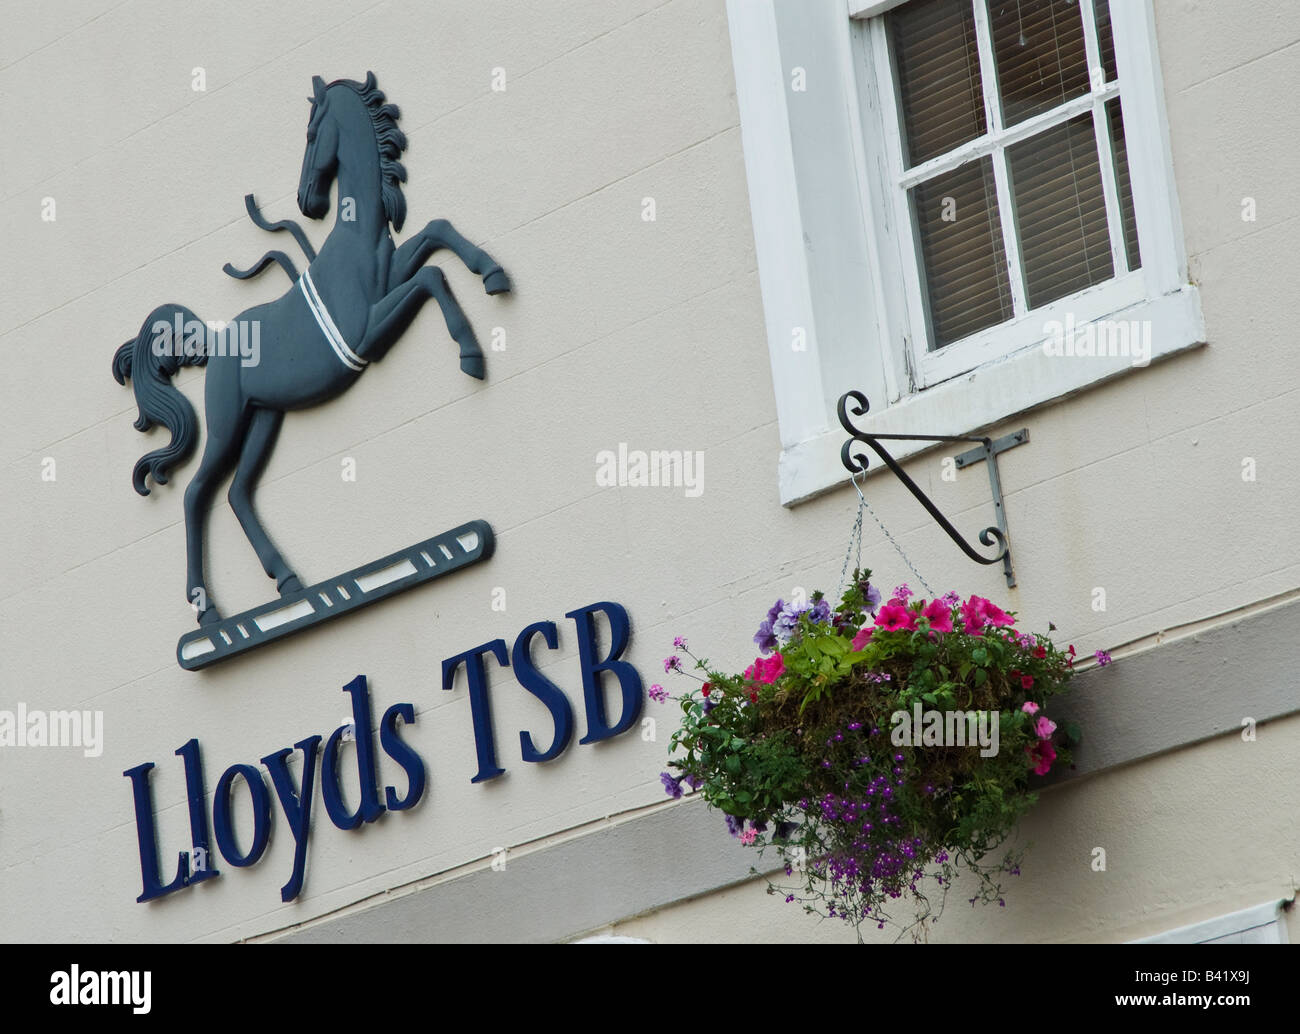 Lloyds TSB bank sign and hanging basket display at a bank in Warwickshire, UK. Stock Photo